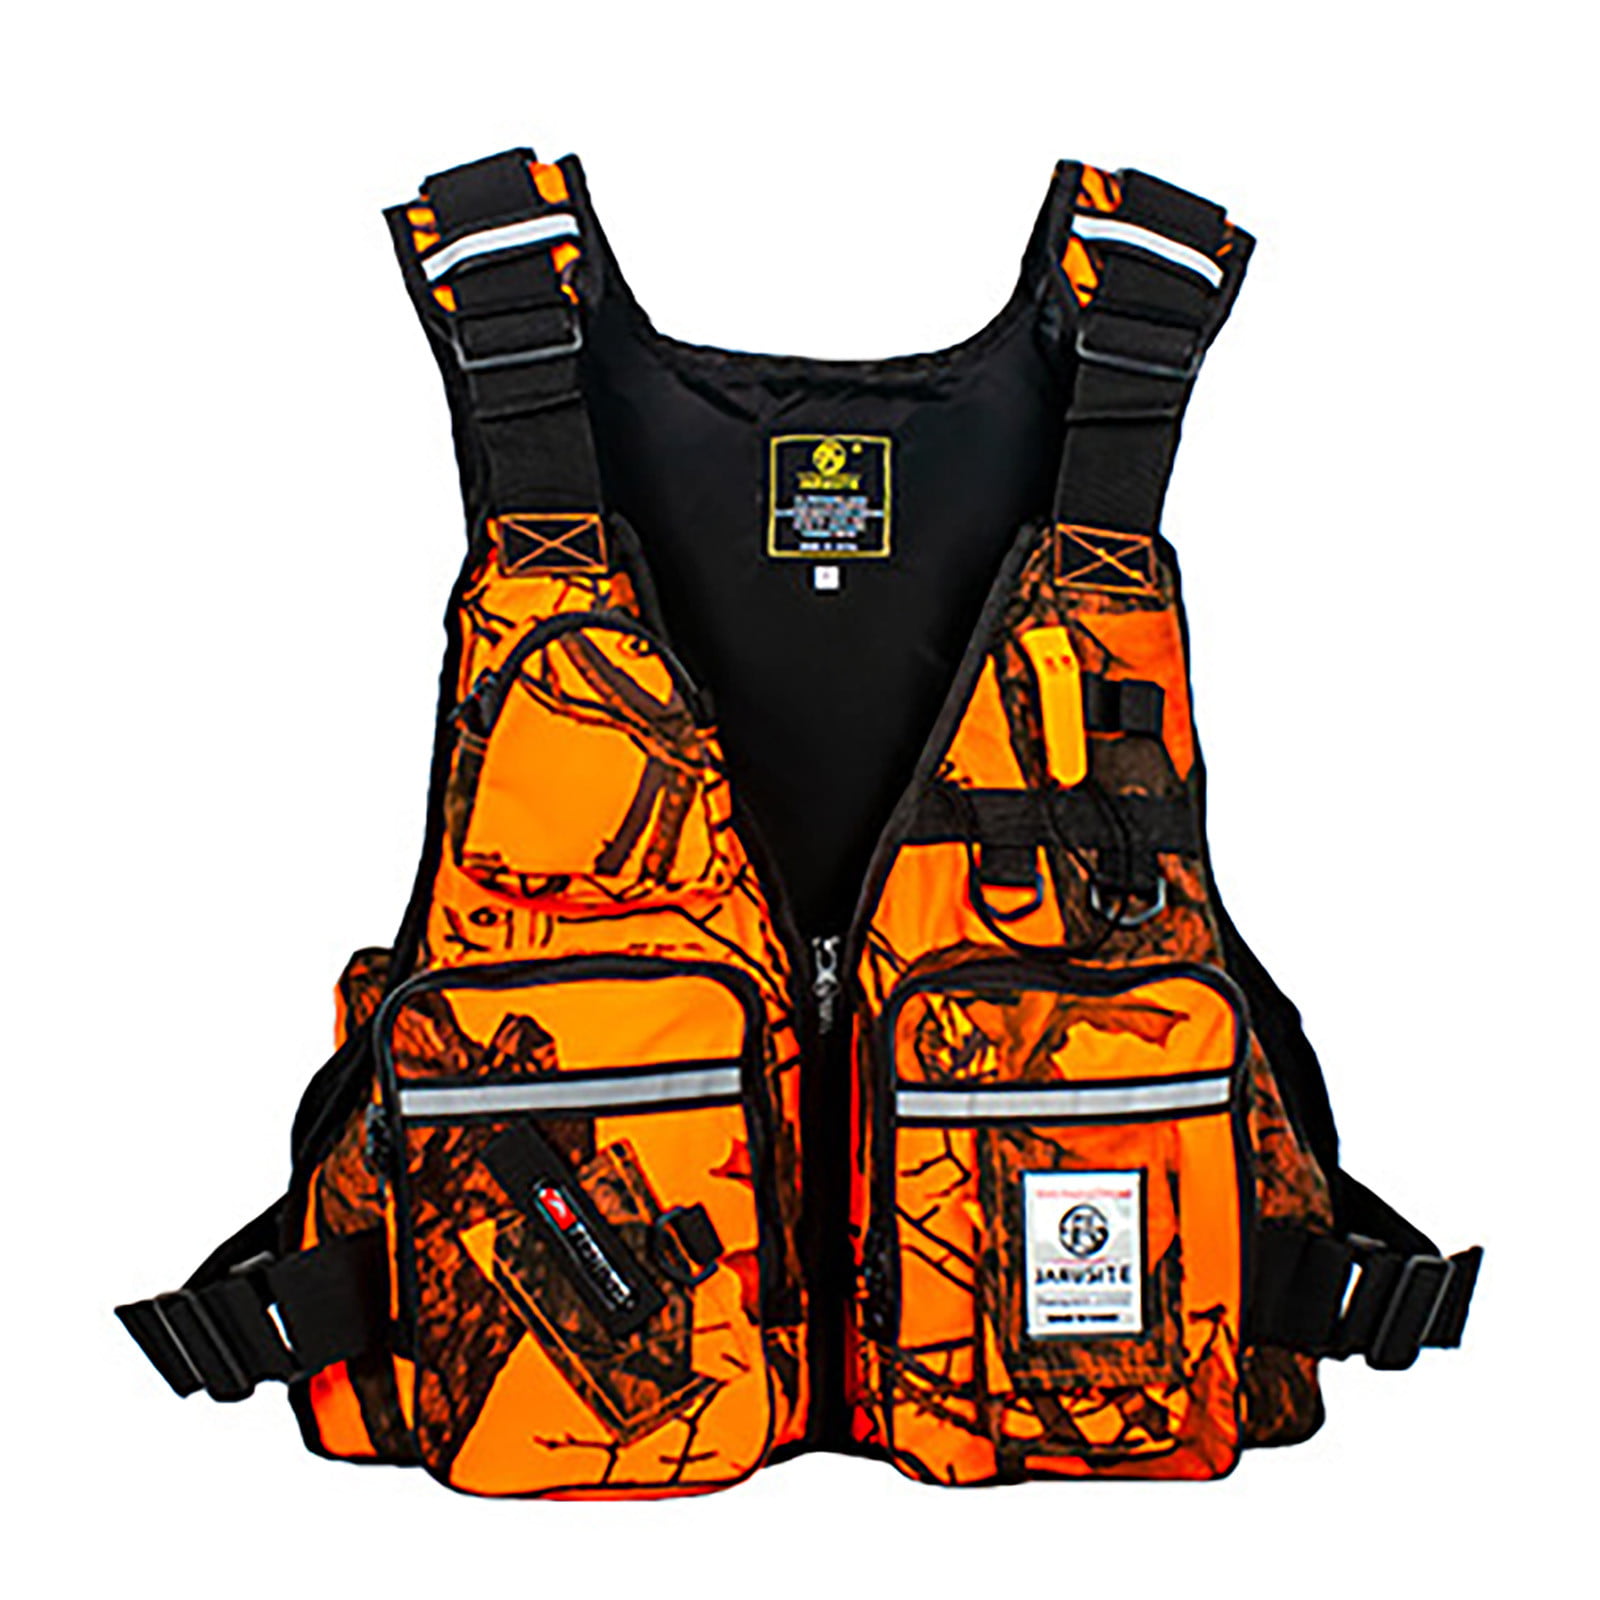 Sailing Fishing Swimming Safety Life Jacket Adjustable High Reflective Life Vest 